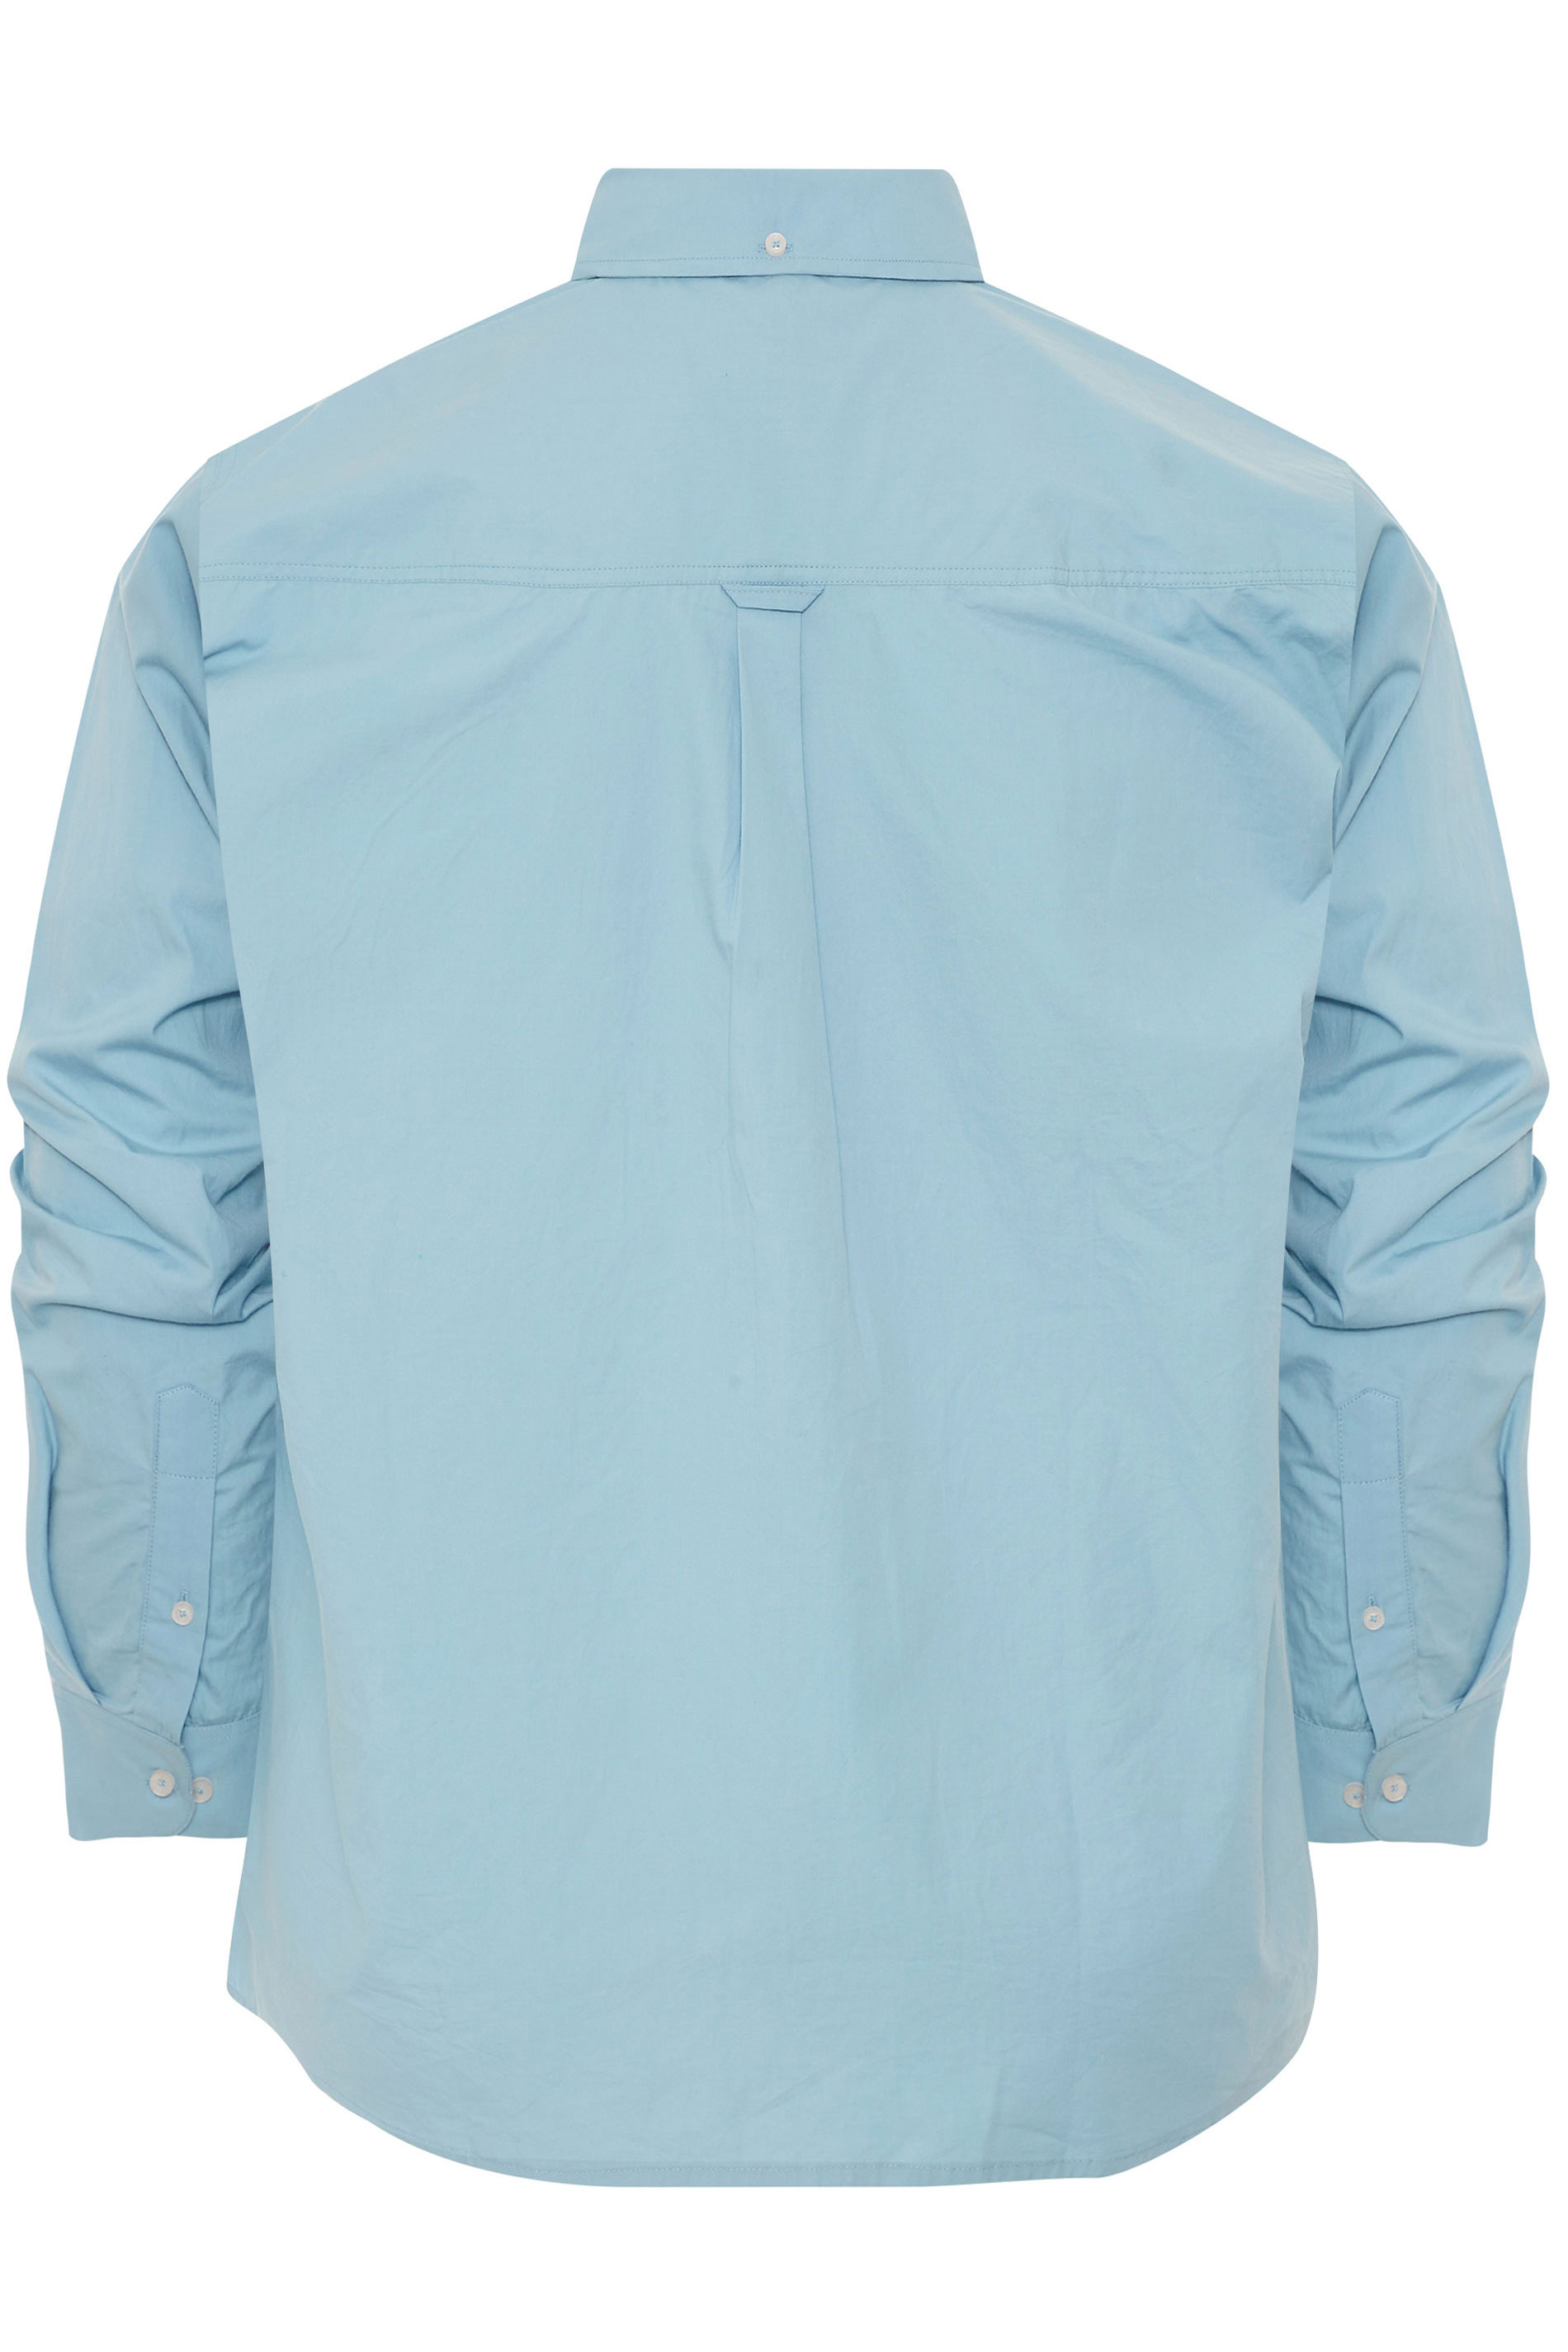 BadRhino Blue Cotton Poplin Long Sleeve Shirt | BadRhino